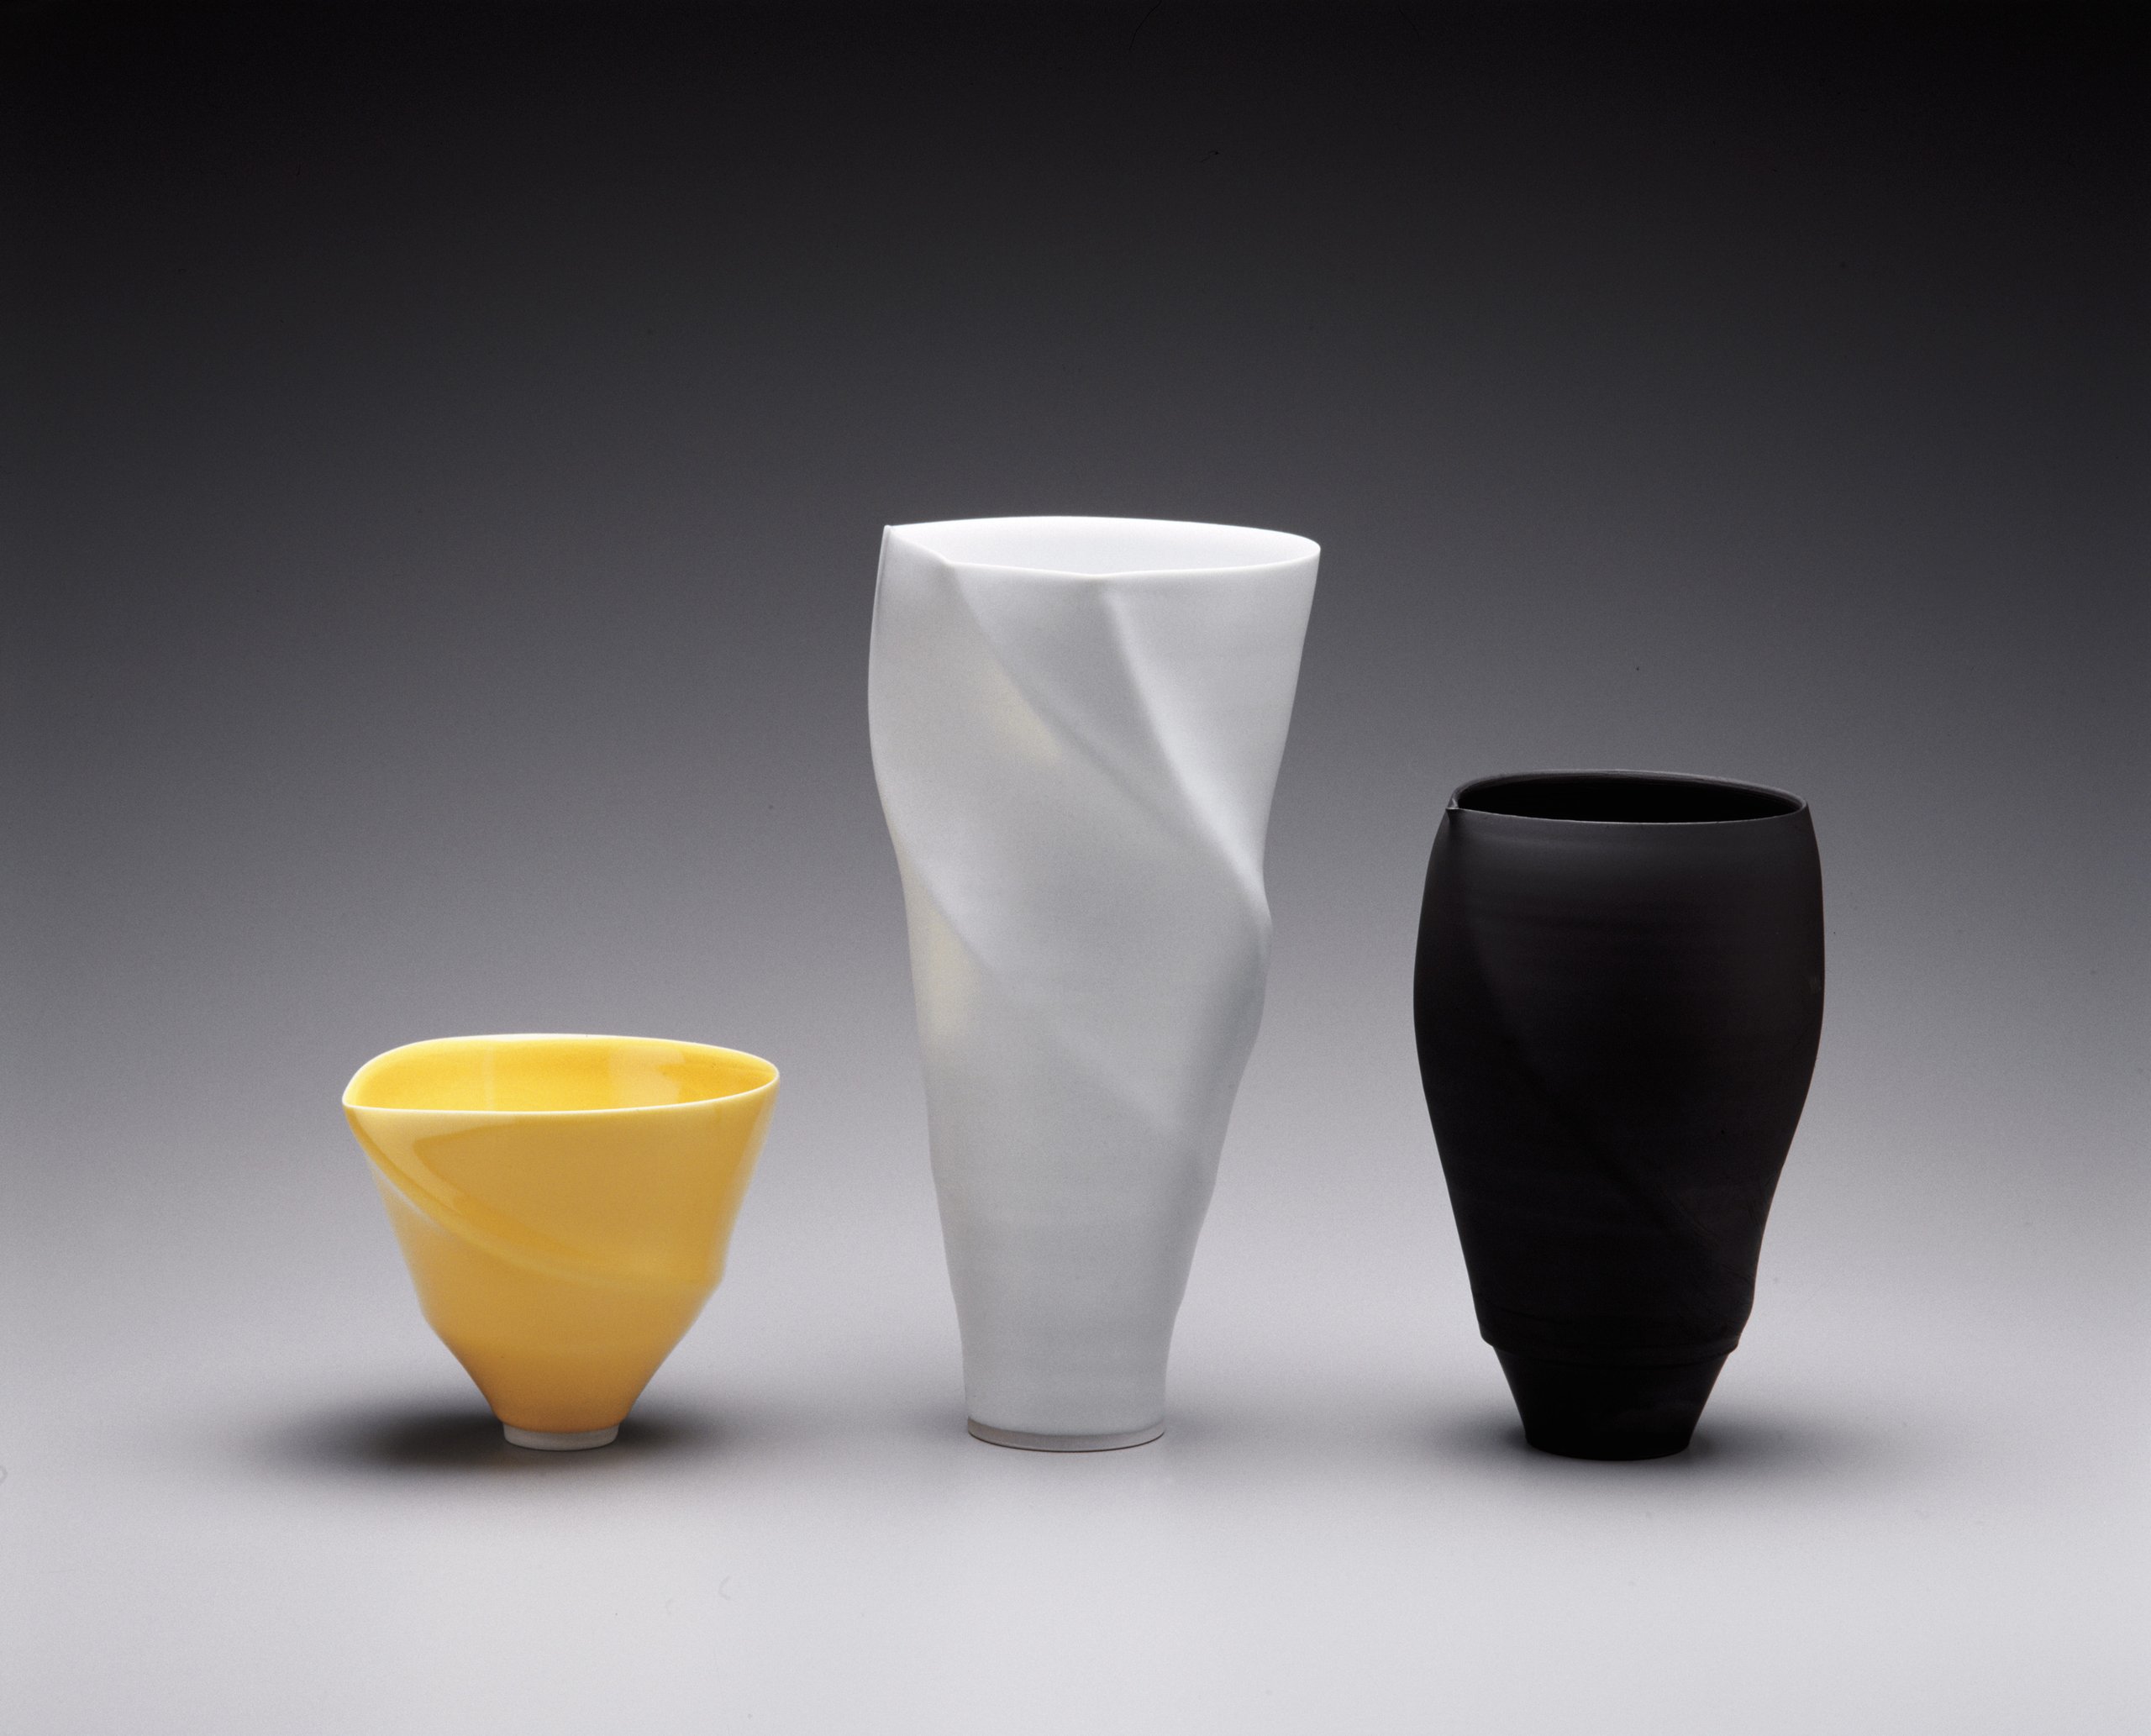 'Spiral form' vase by Victor Greenaway